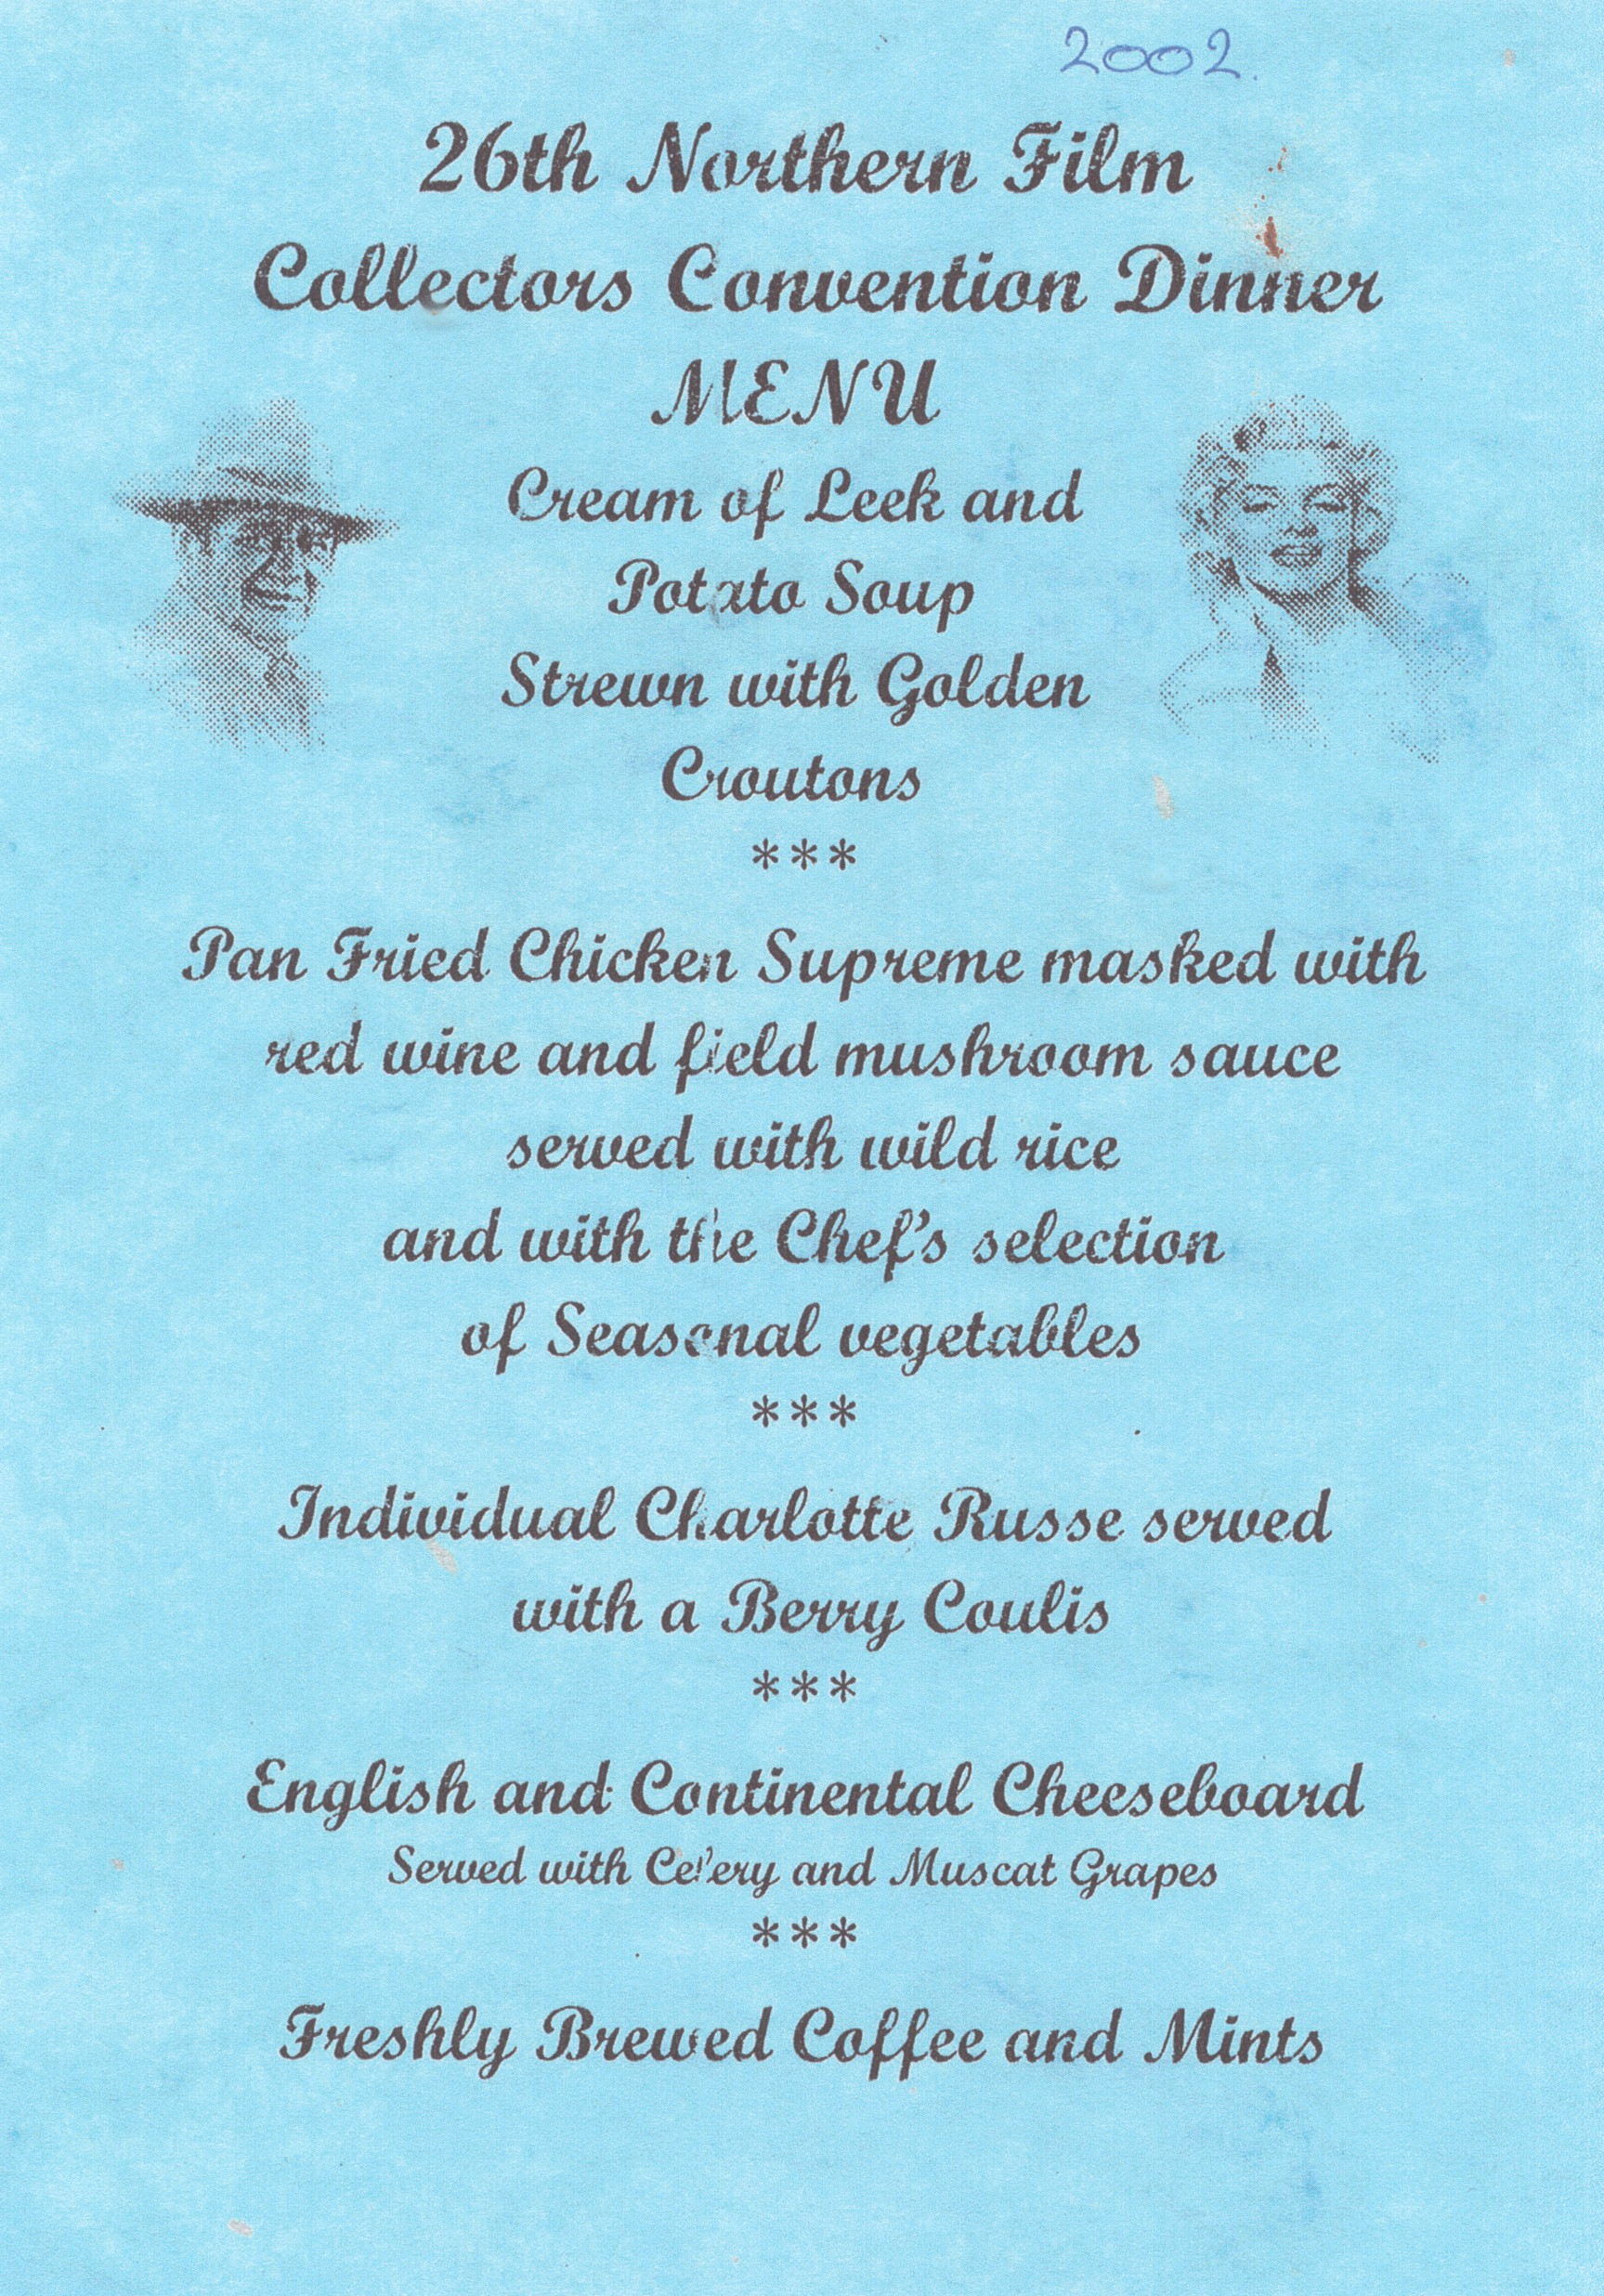 2002 Convention Dinner menu